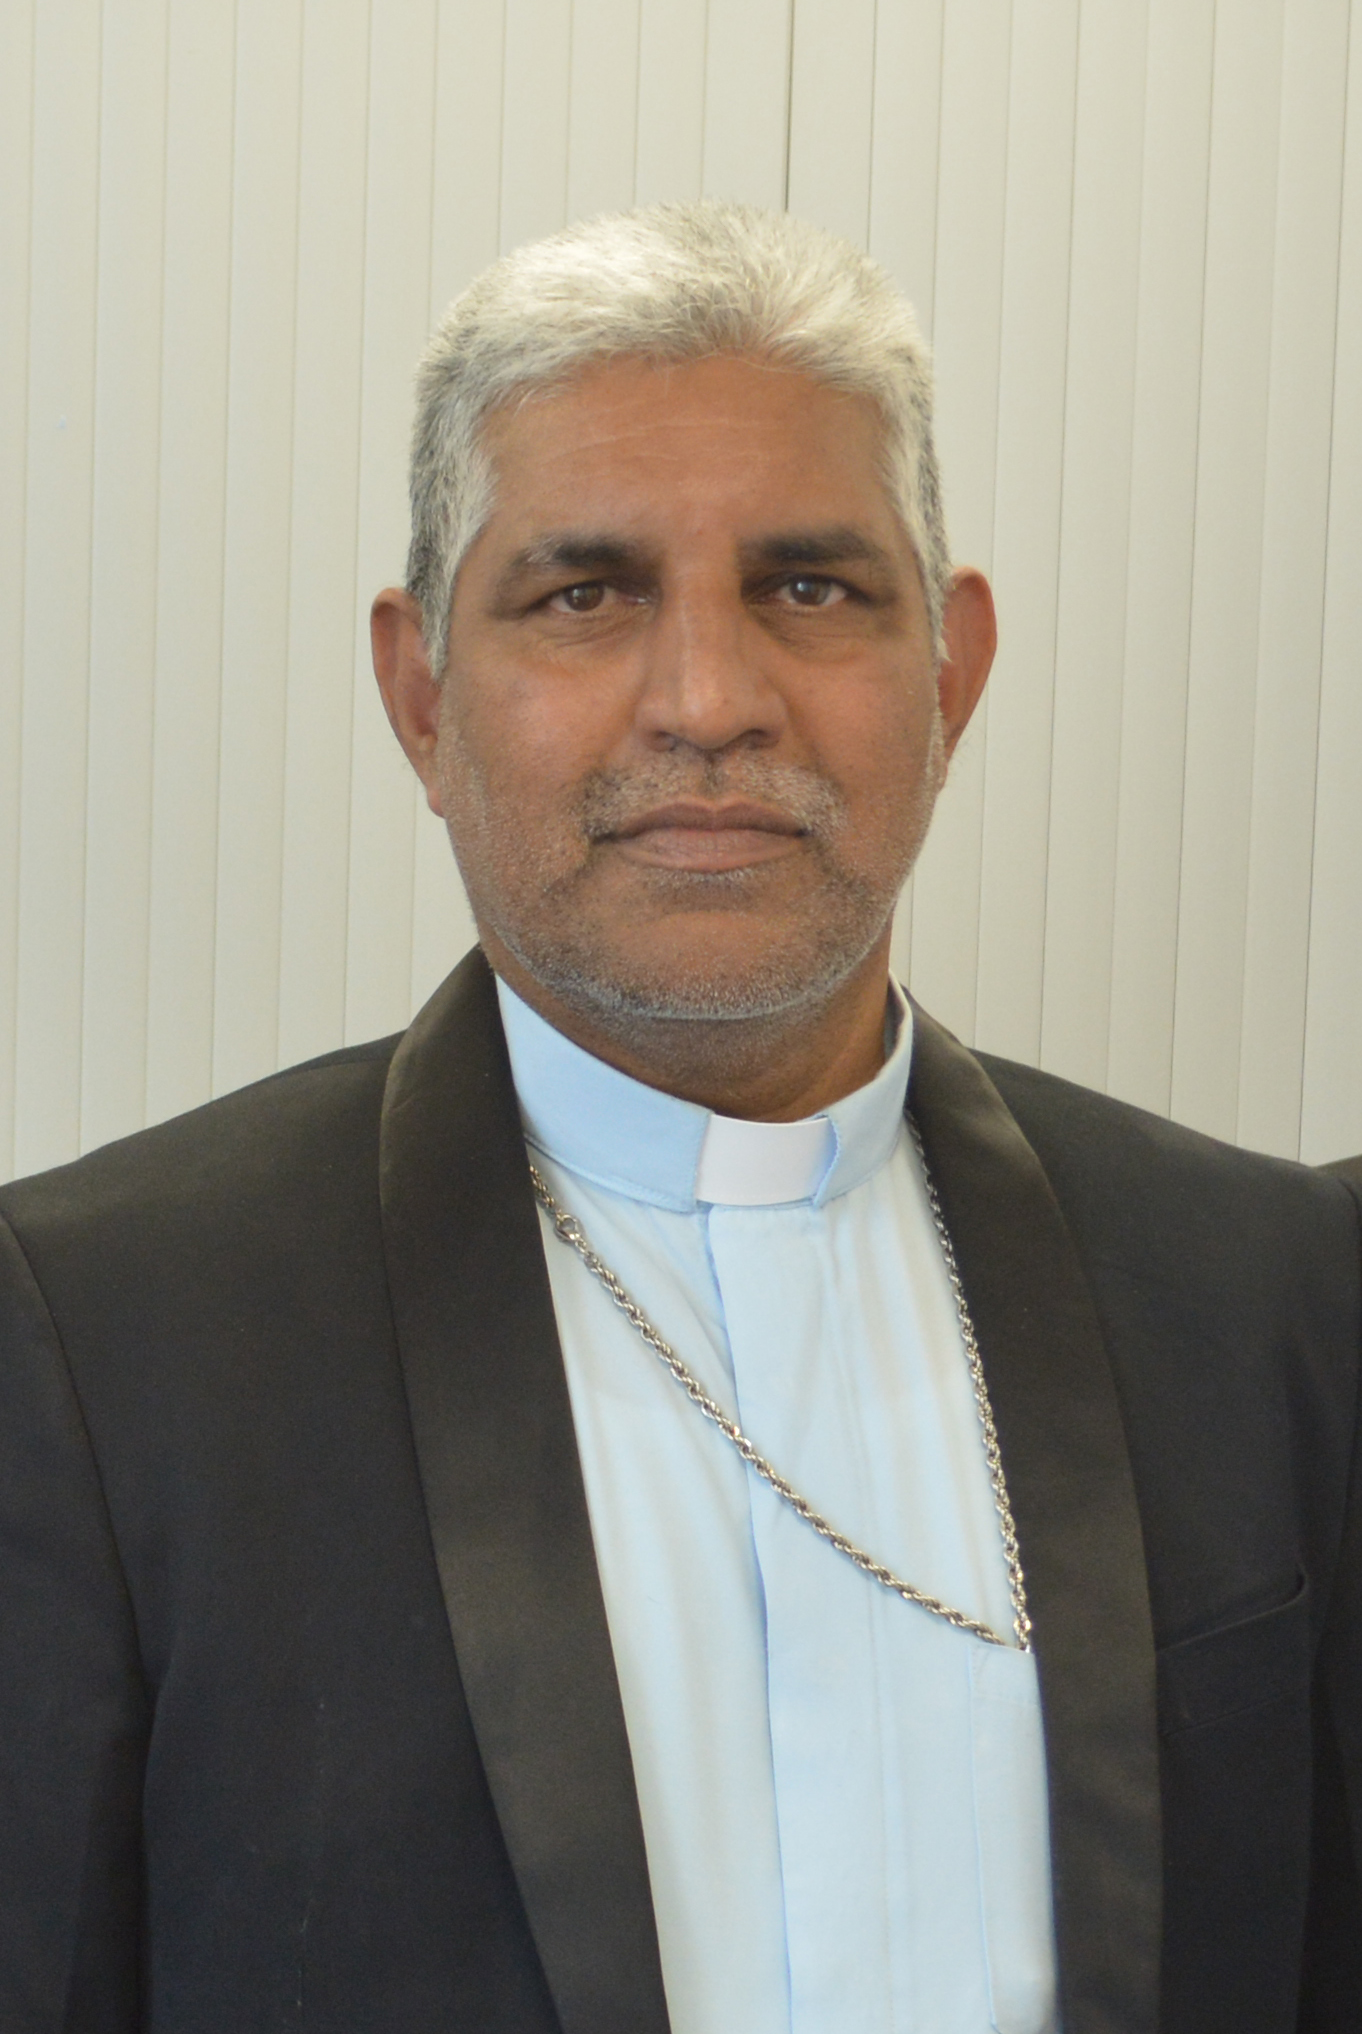 Bishop Nazarene Soosai of Kottar Diocese, southern India